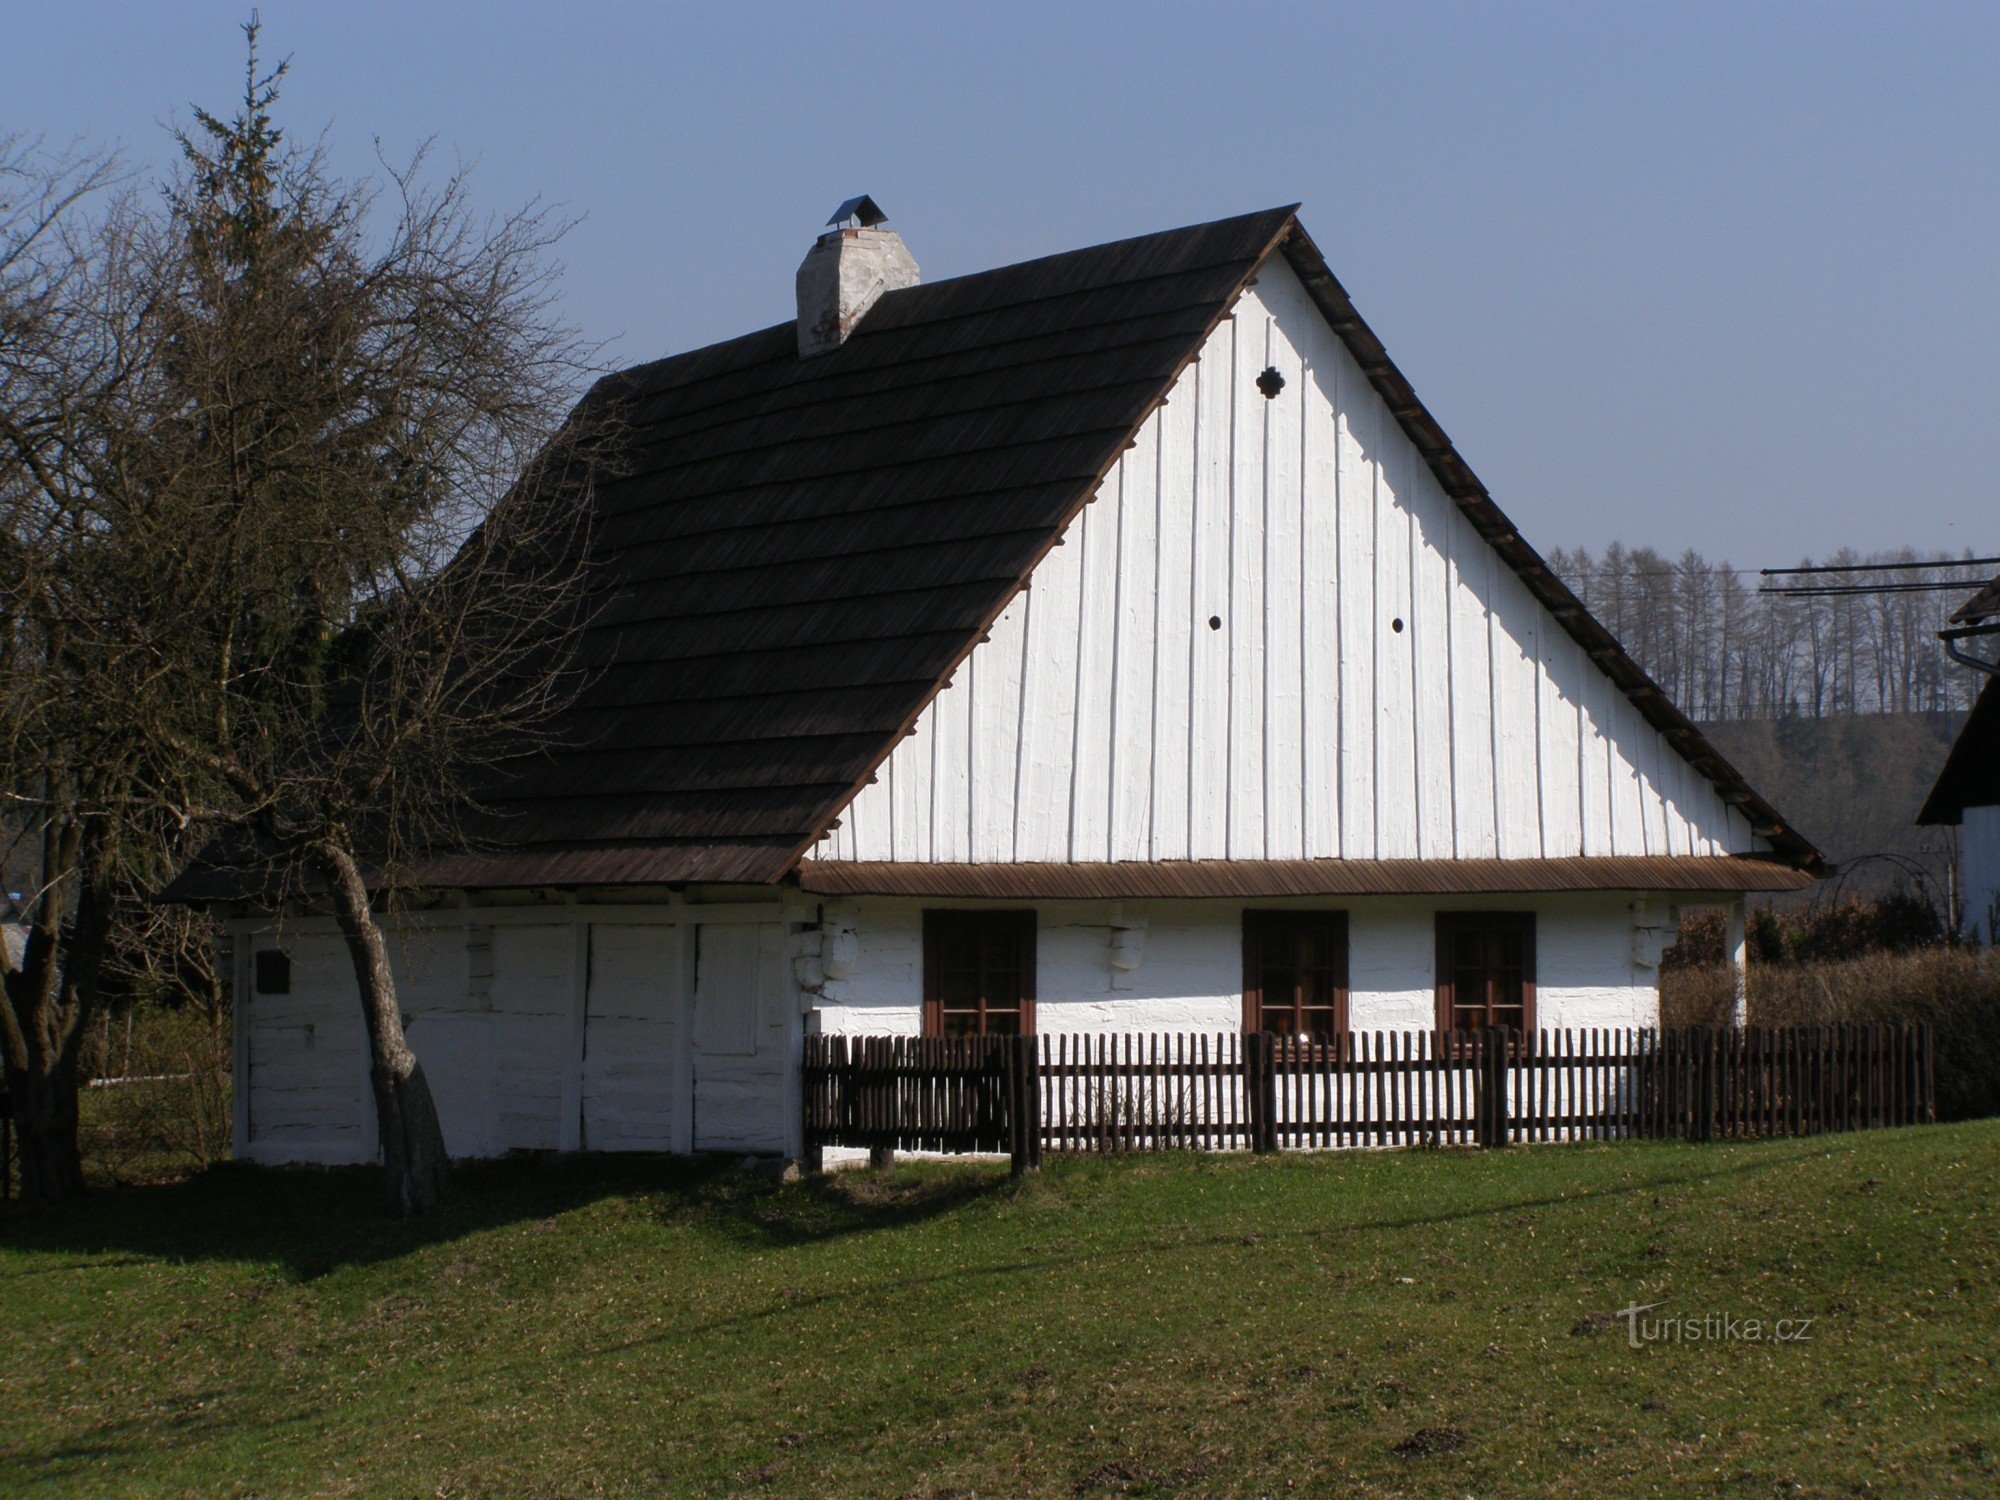 Žamberk (Helvíkovice) - geboorteplaats van Prokop Diviš